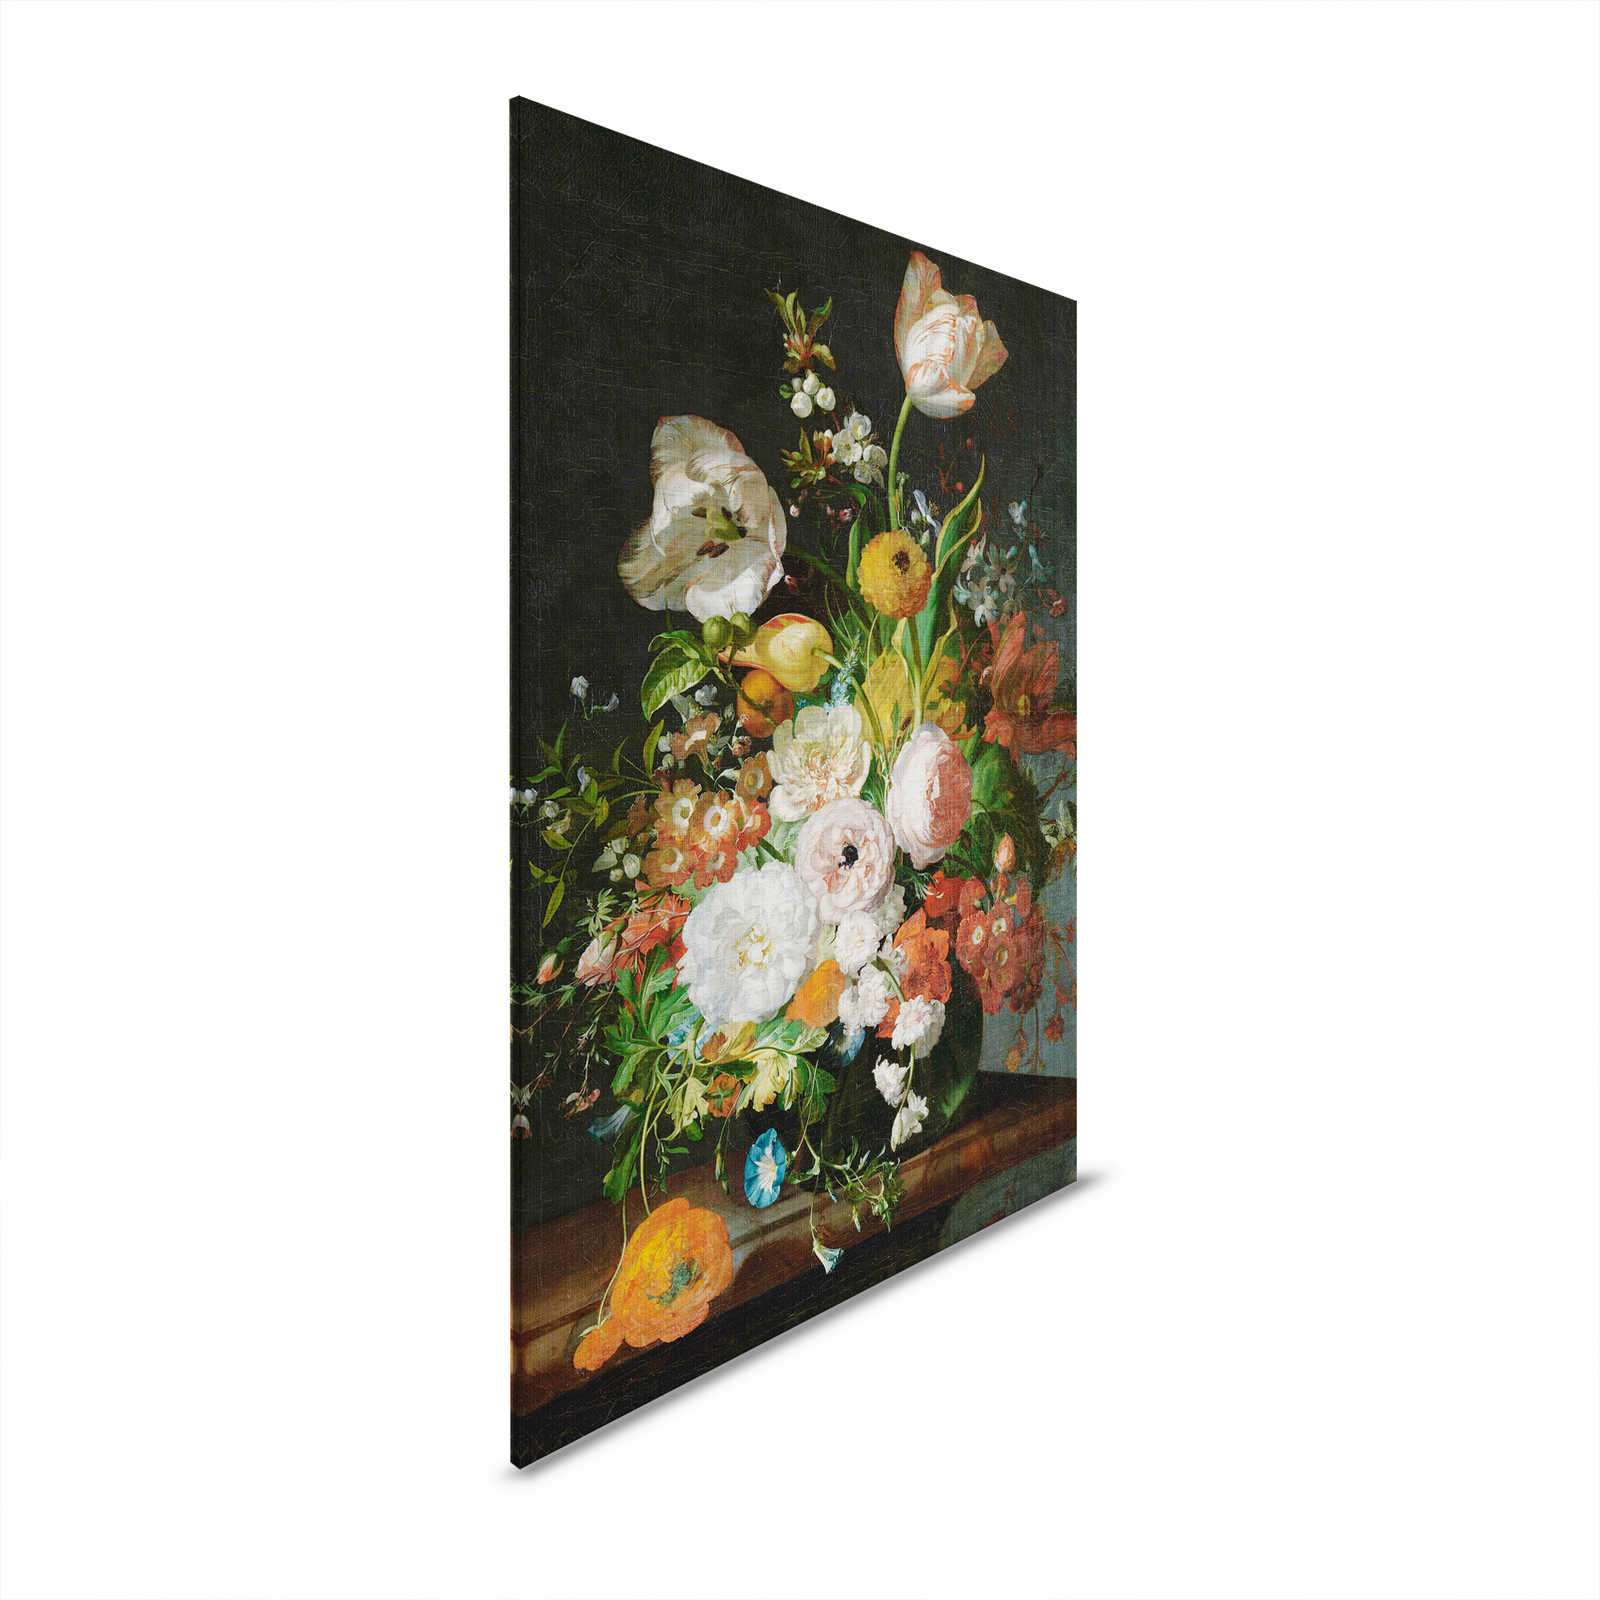 Artistas Studio 2 - Lienzo Flores Bouquet Pintura Tipo estilo - 0.80 m x 1.20 m
